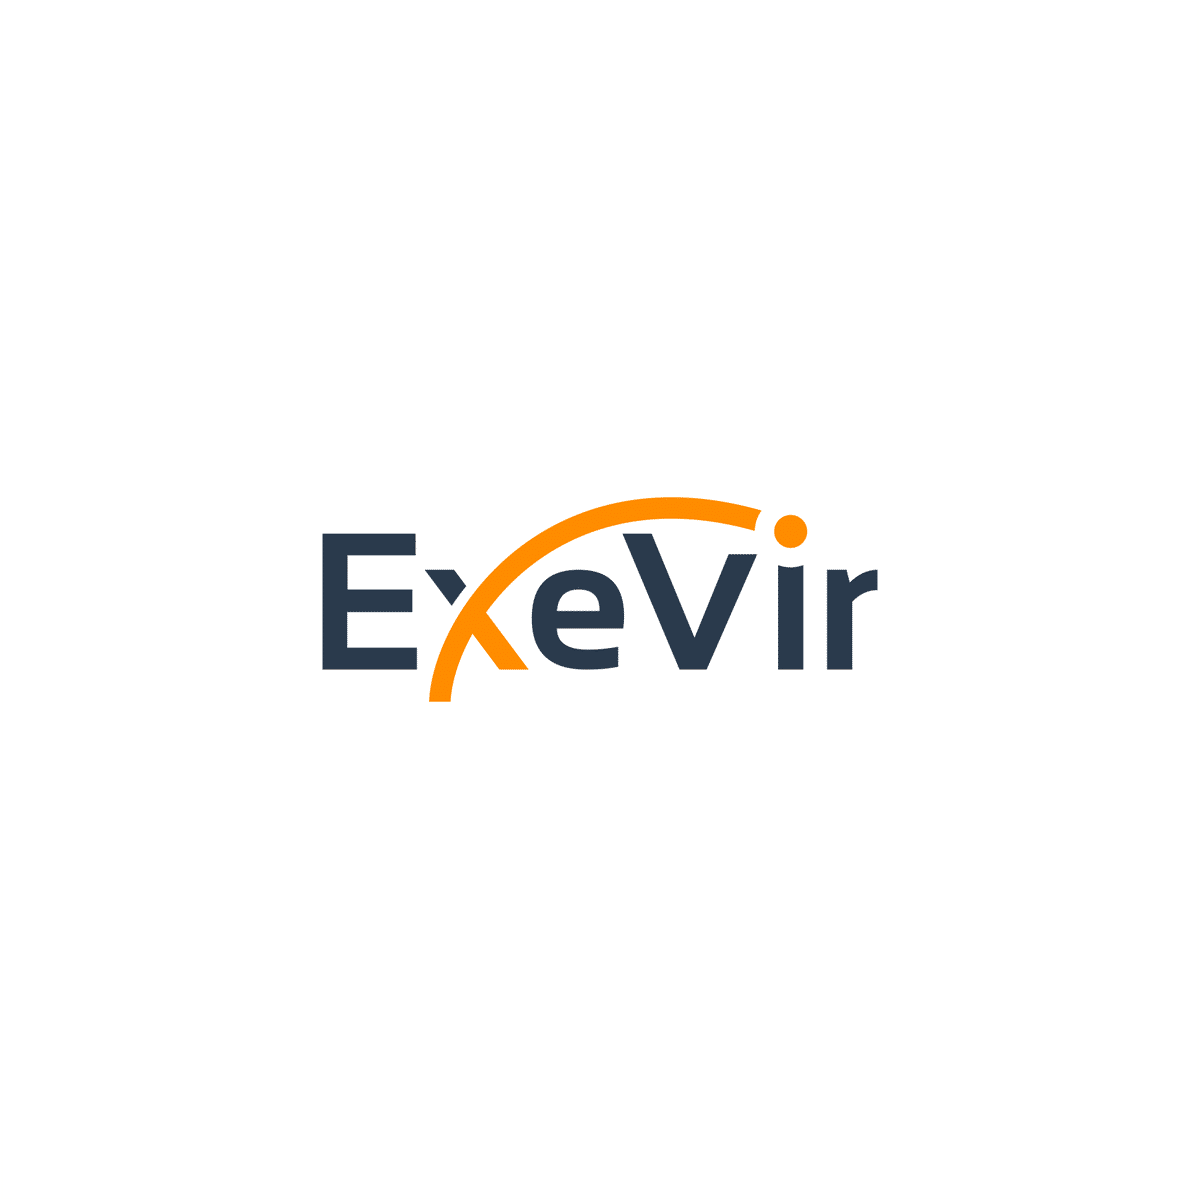 Exevir Bio BV